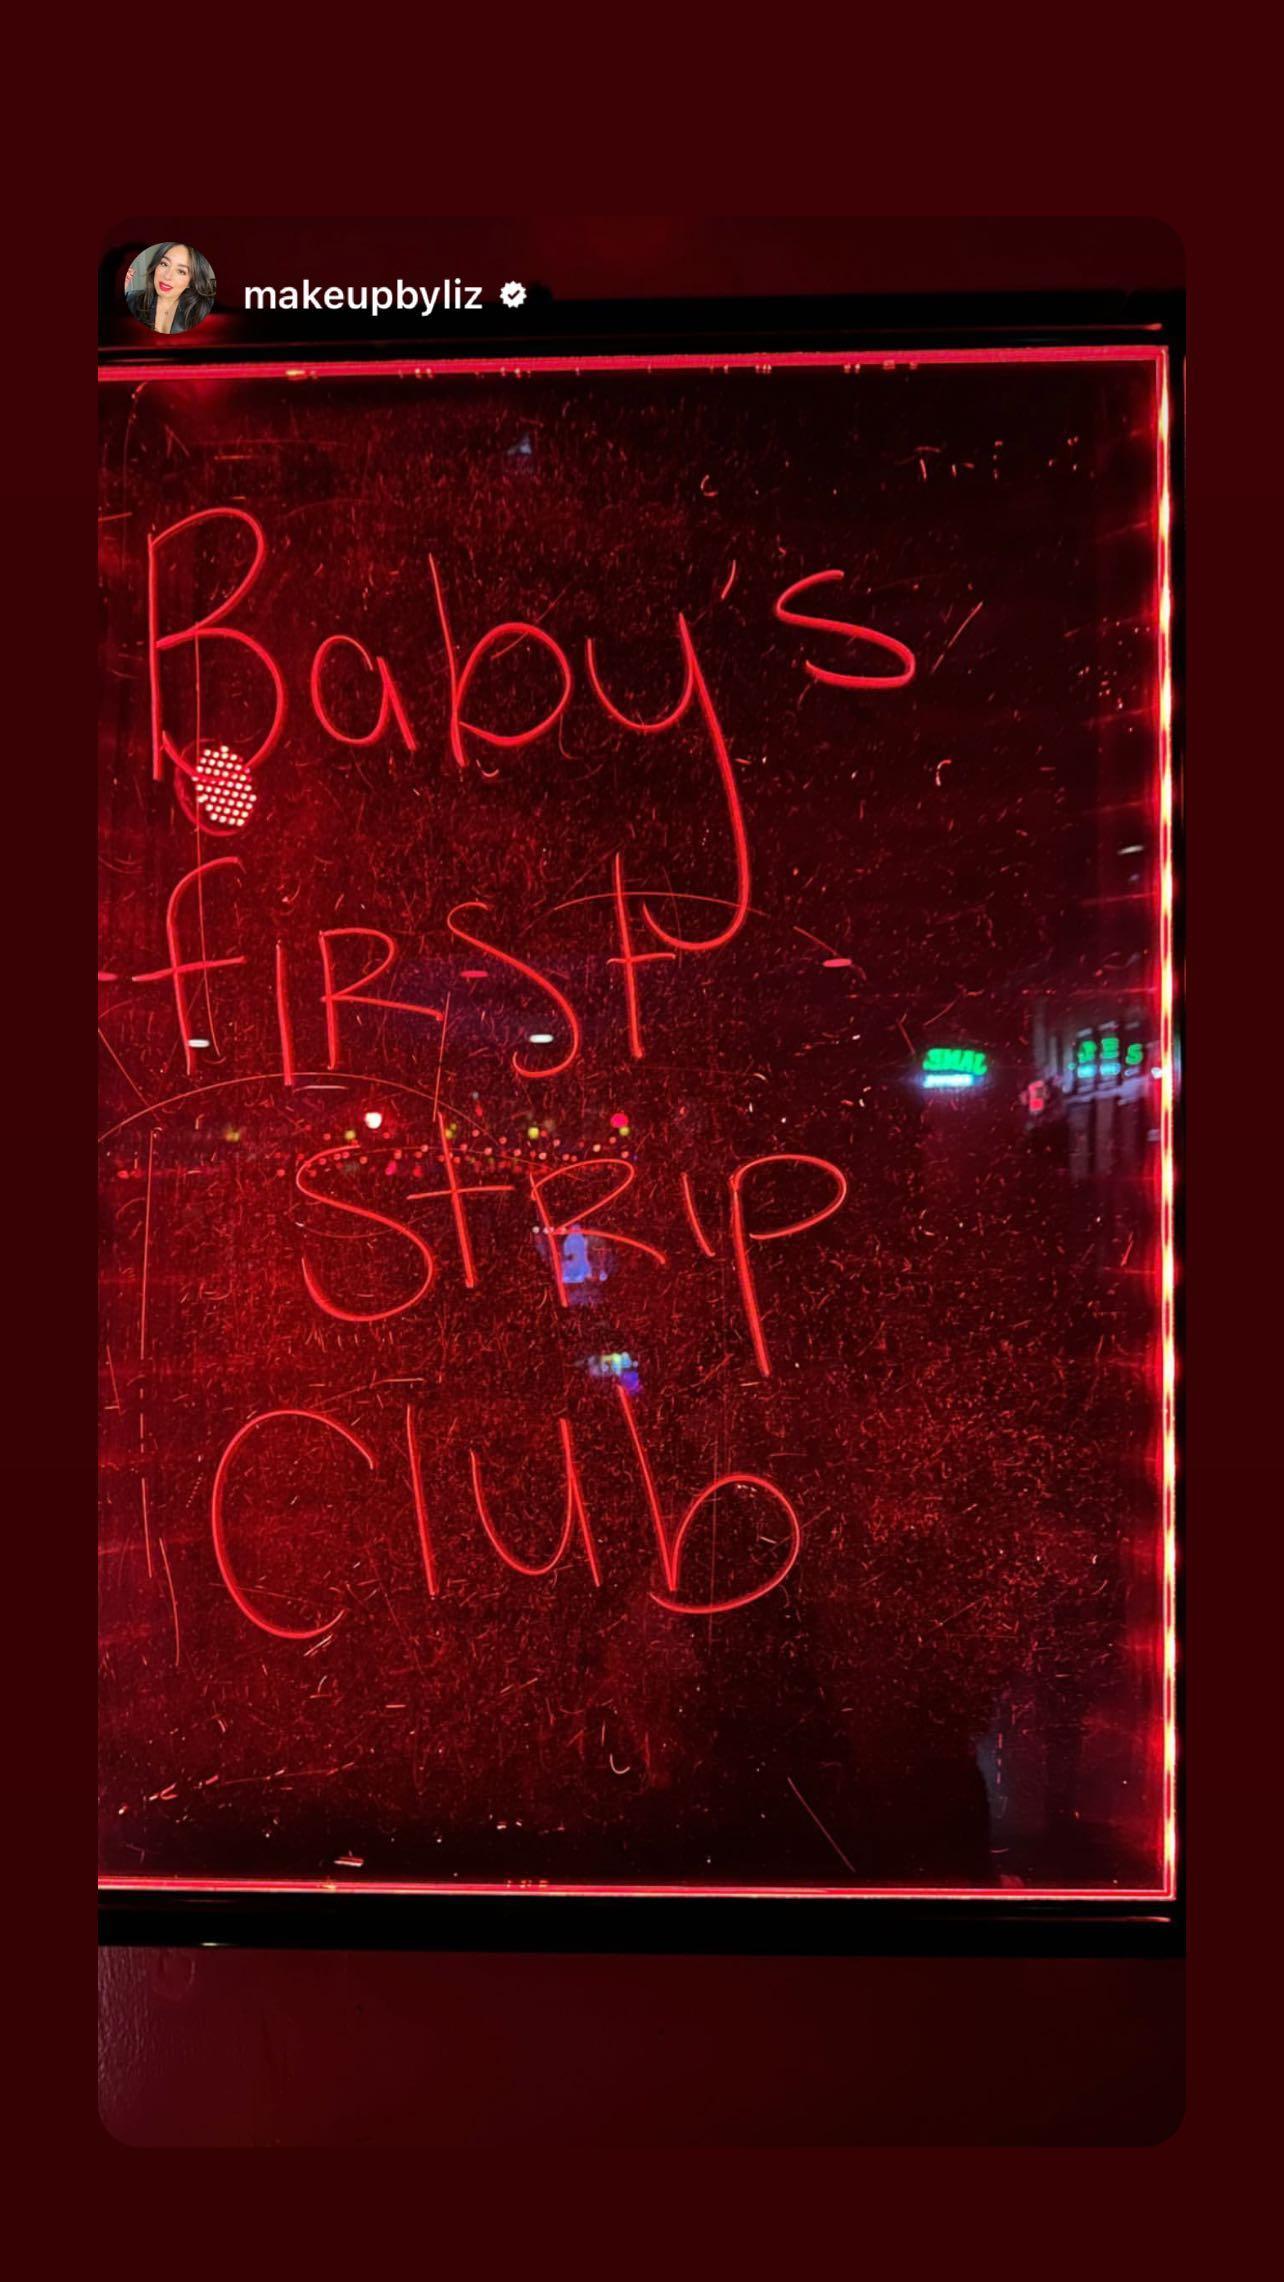 Ireland Baldwin Hosts Stripper Themed Baby Shower